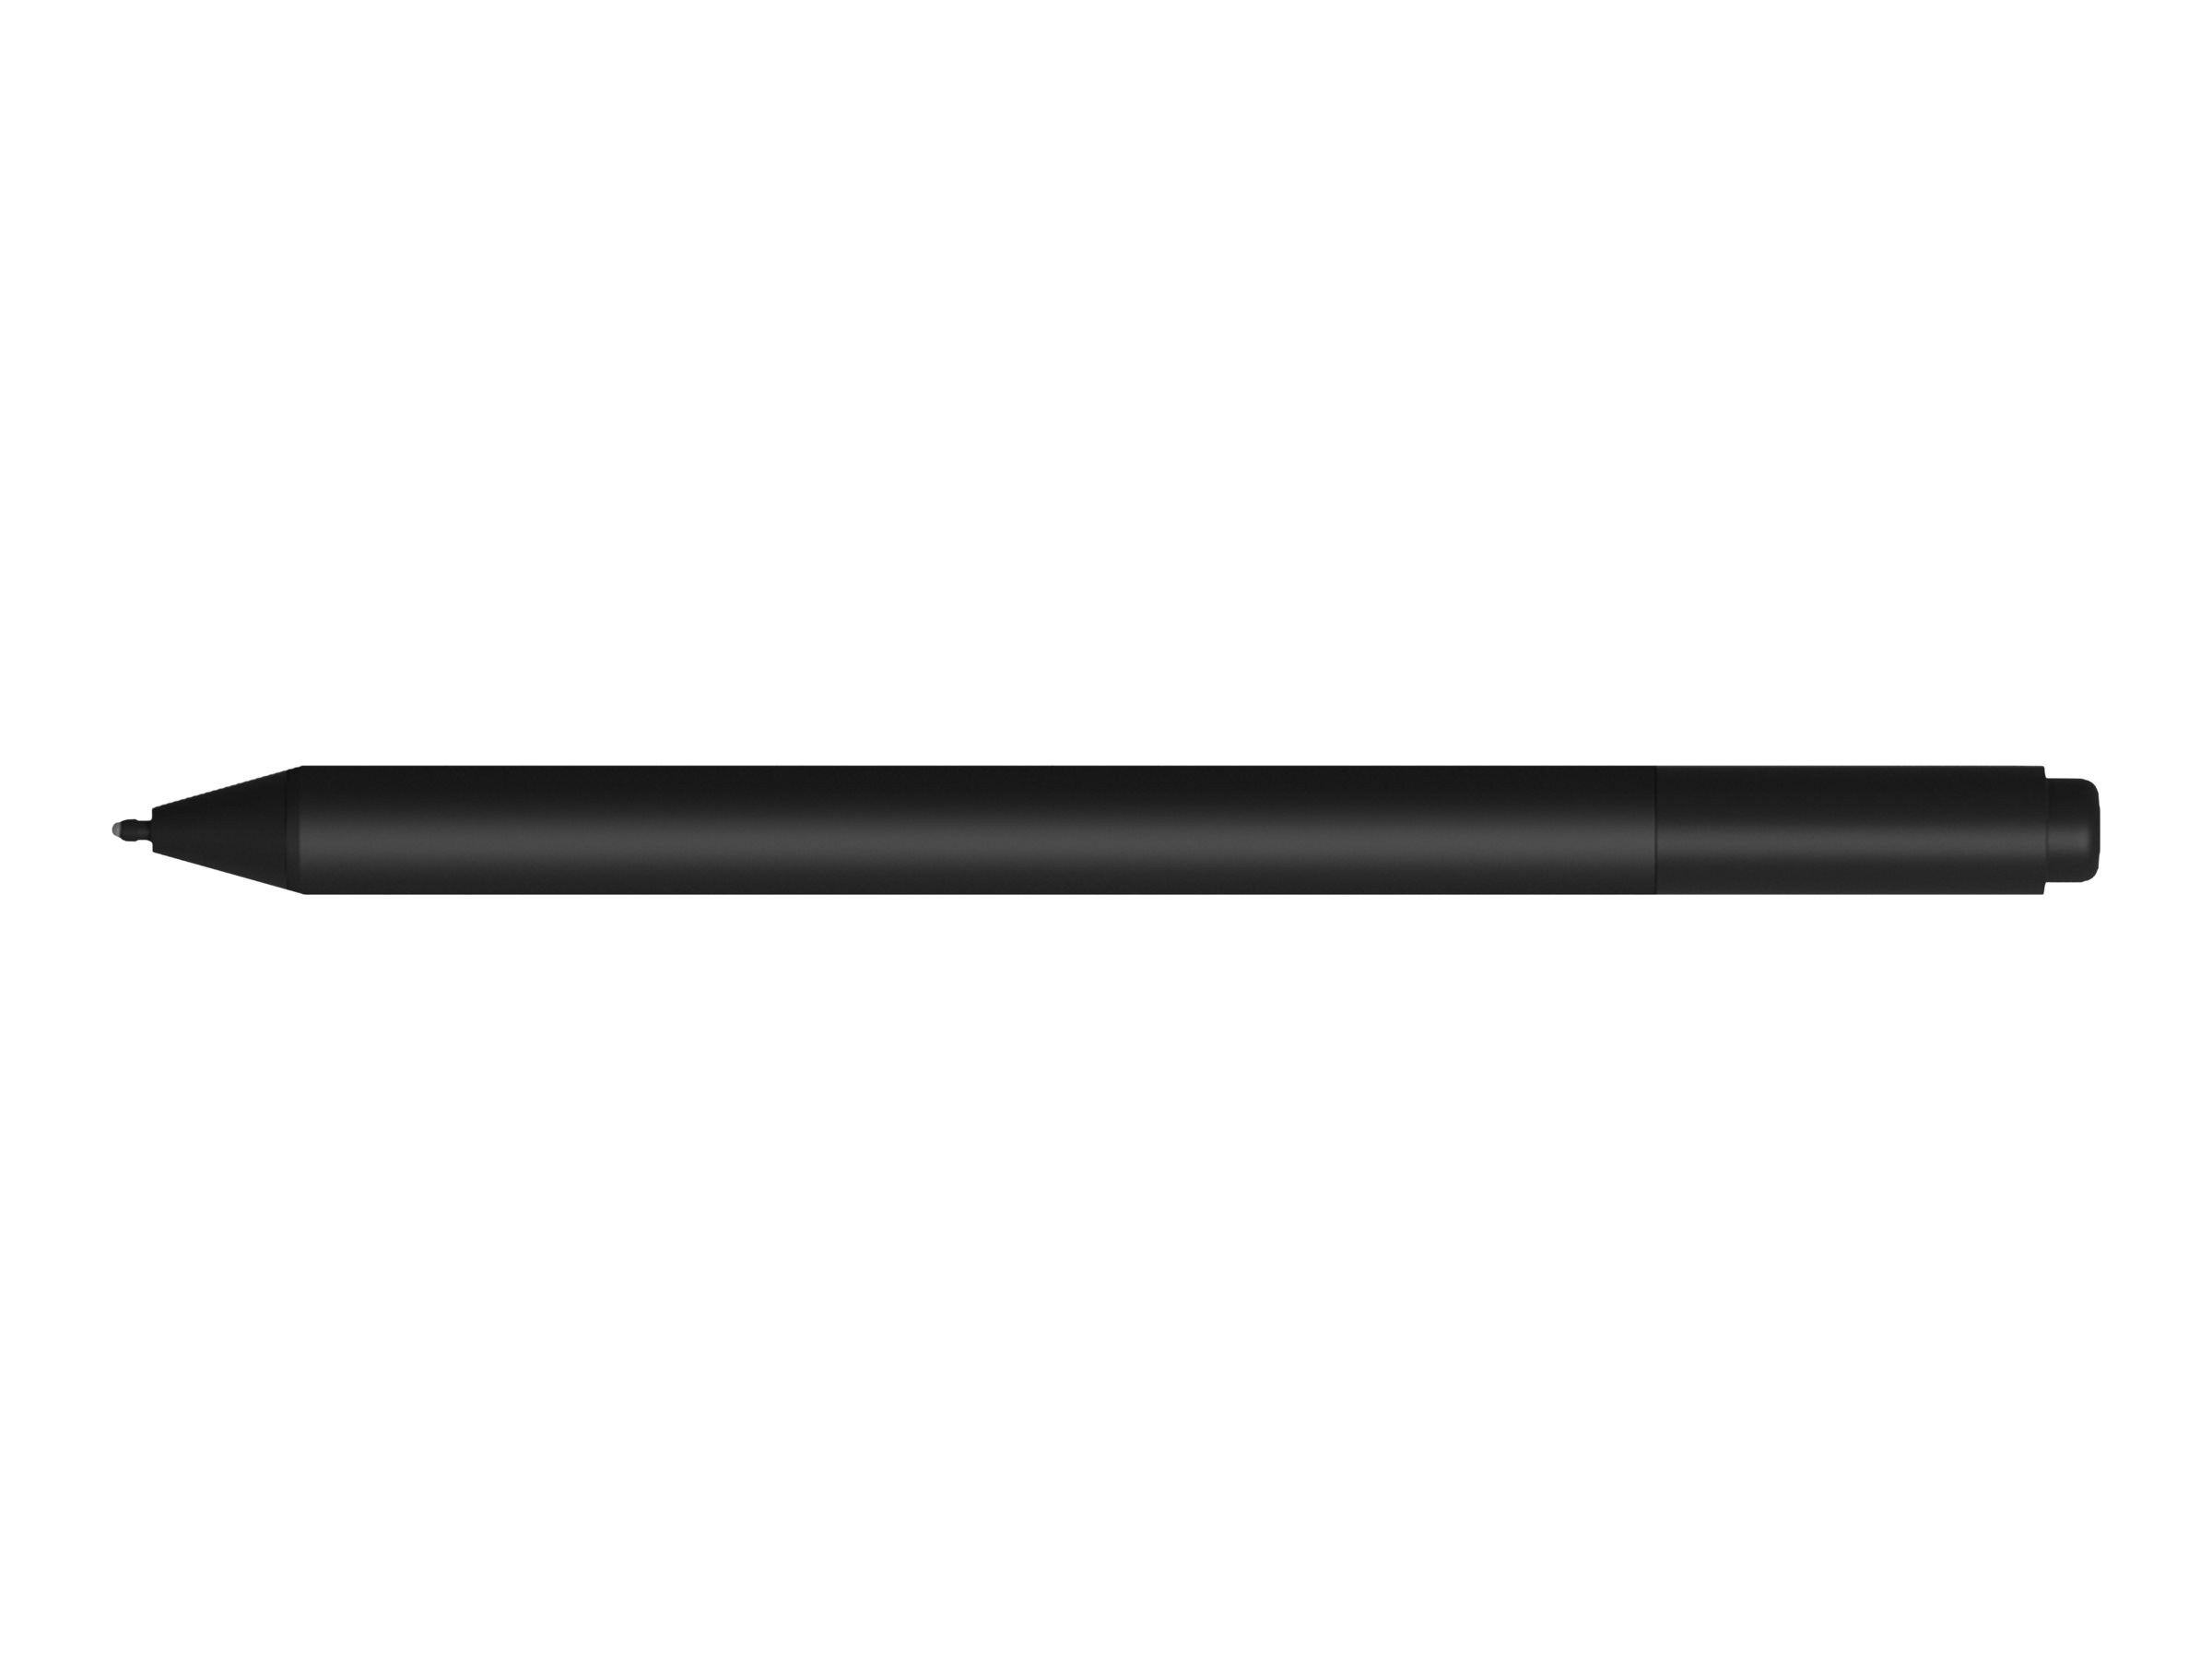 MS Srfc Pro Pen Charcoal (DA/FI/NO/SV) (EYV-00003)